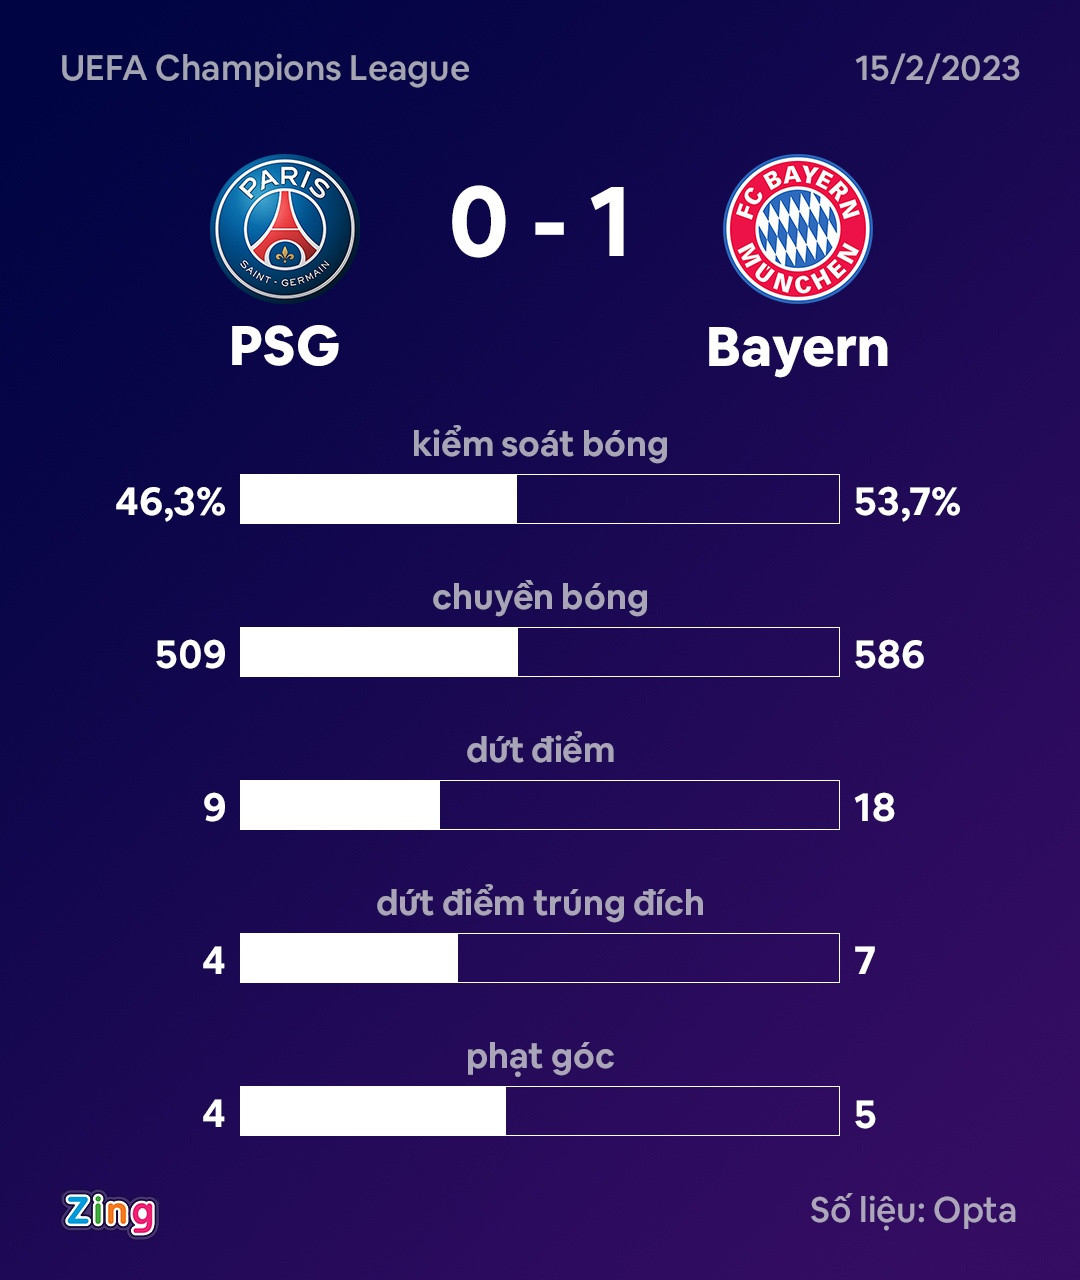 PSG thua Bayern anh 4